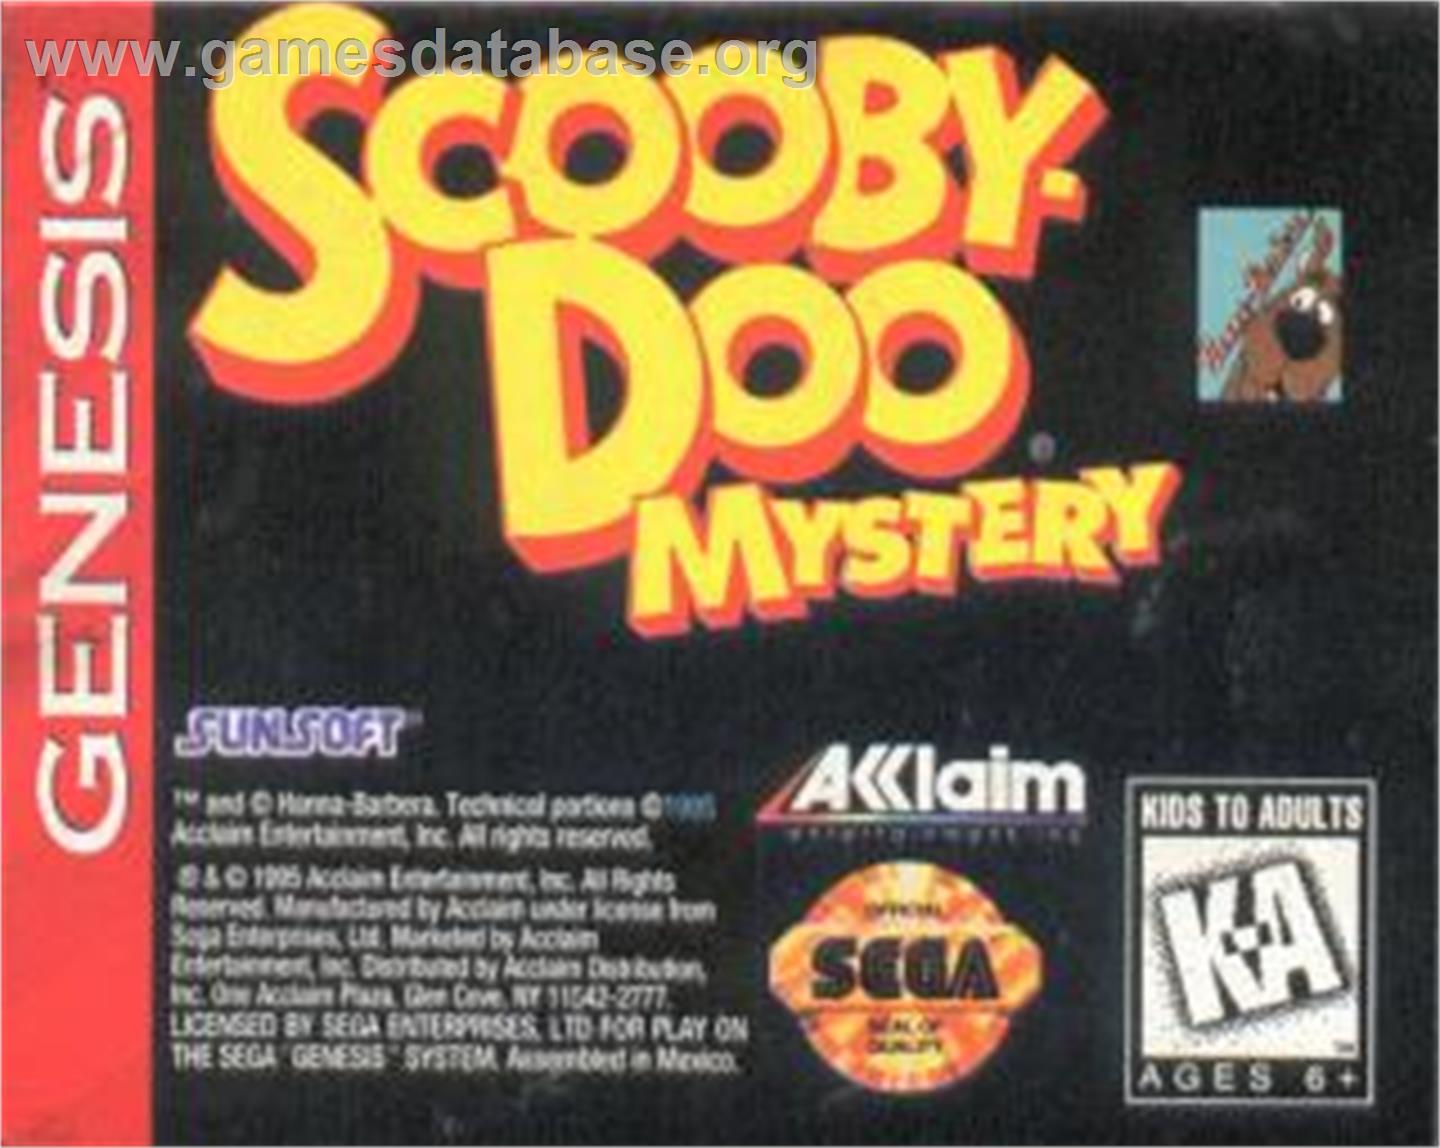 Scooby Doo Mystery - Sega Nomad - Artwork - Cartridge